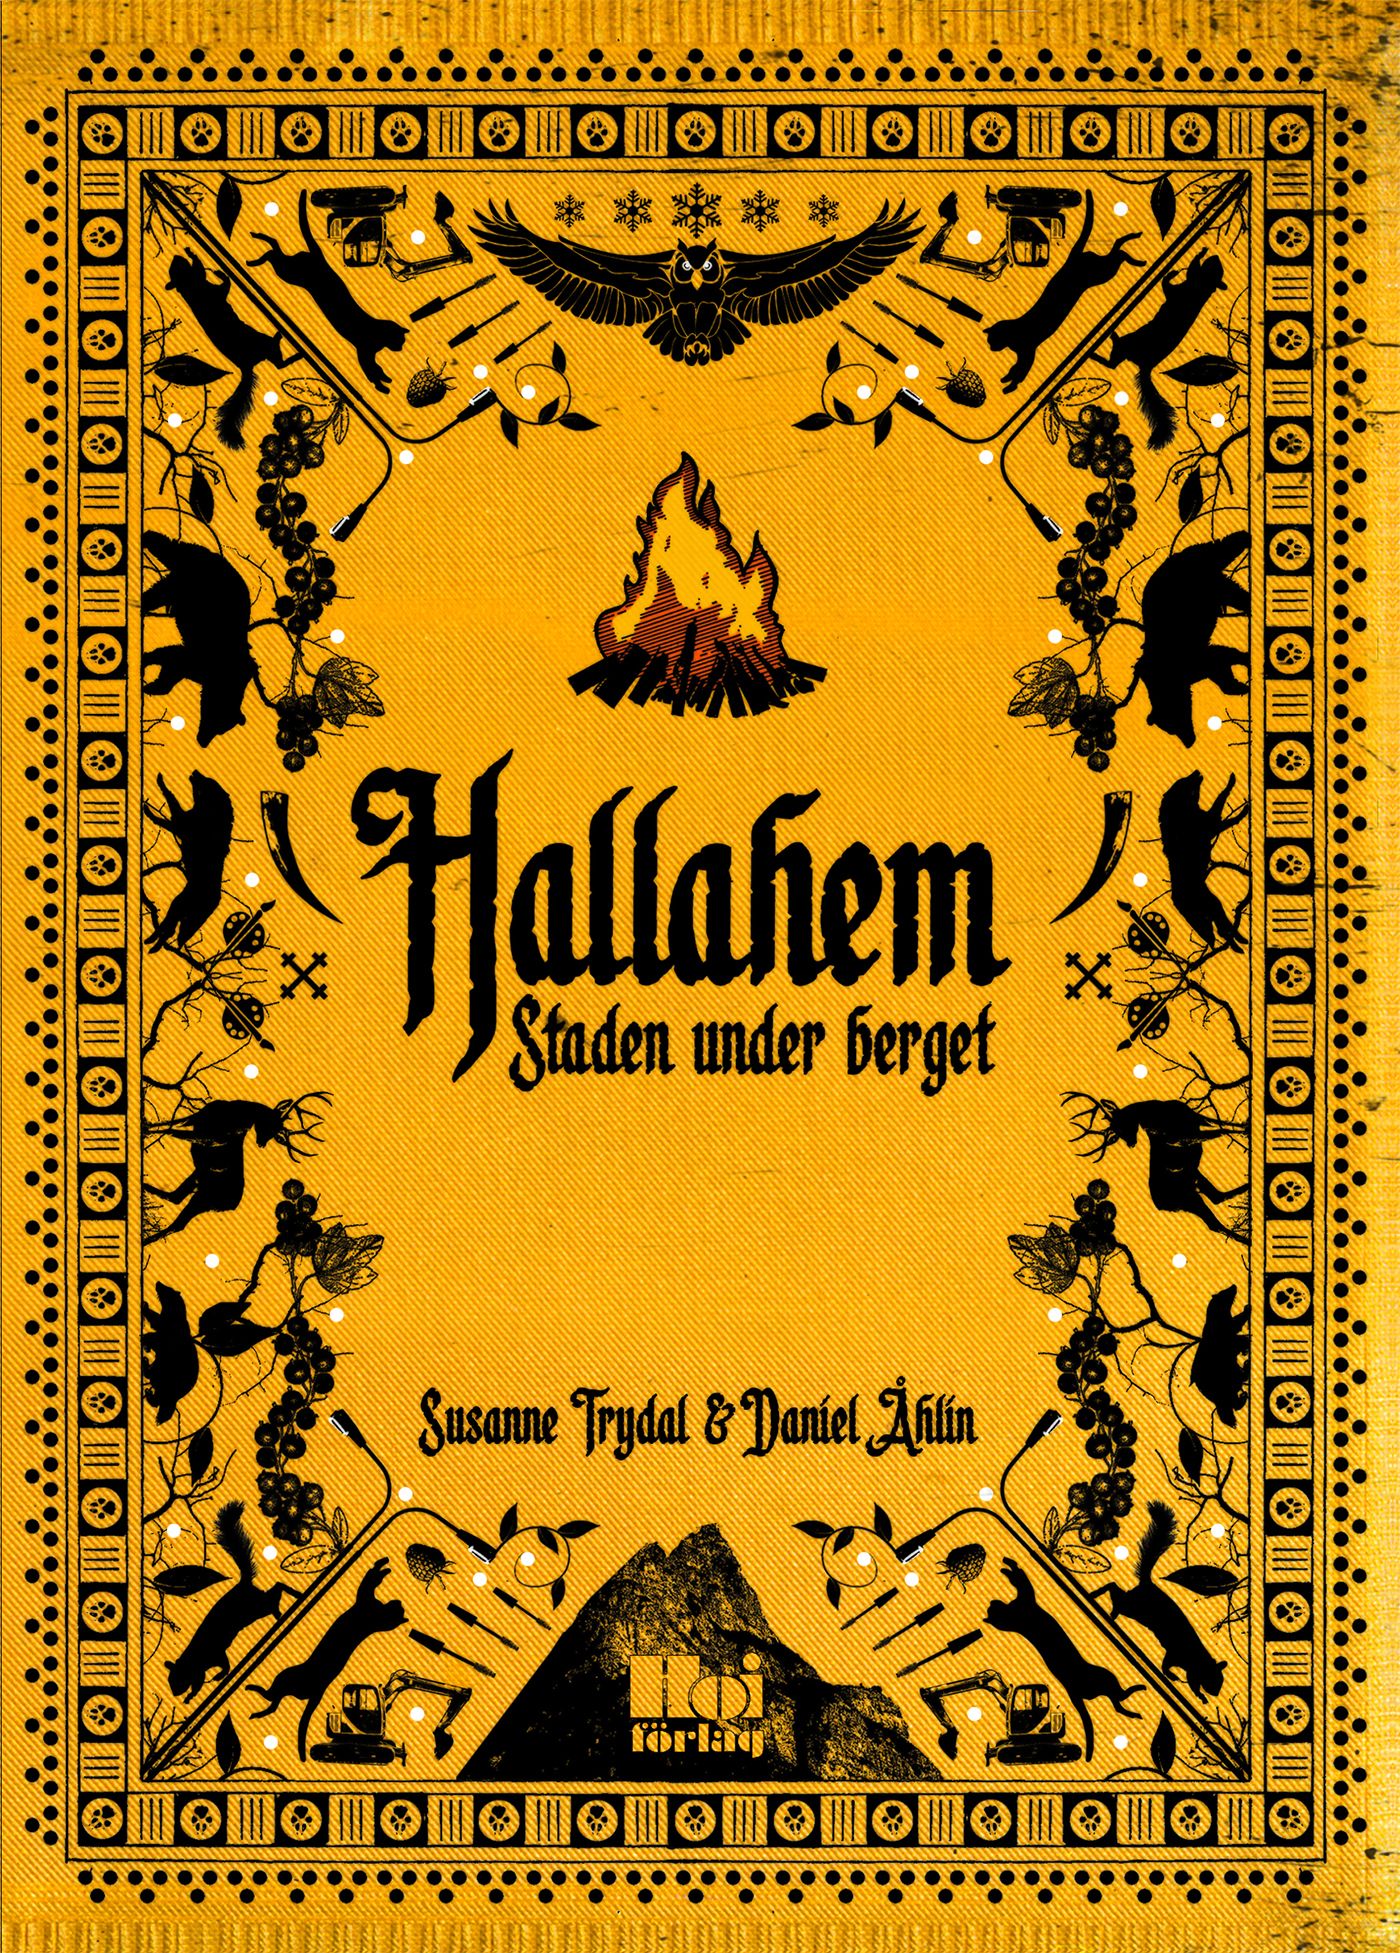 Hallahem - Staden under berget, eBook by Susanne Trydal, Daniel Åhlin